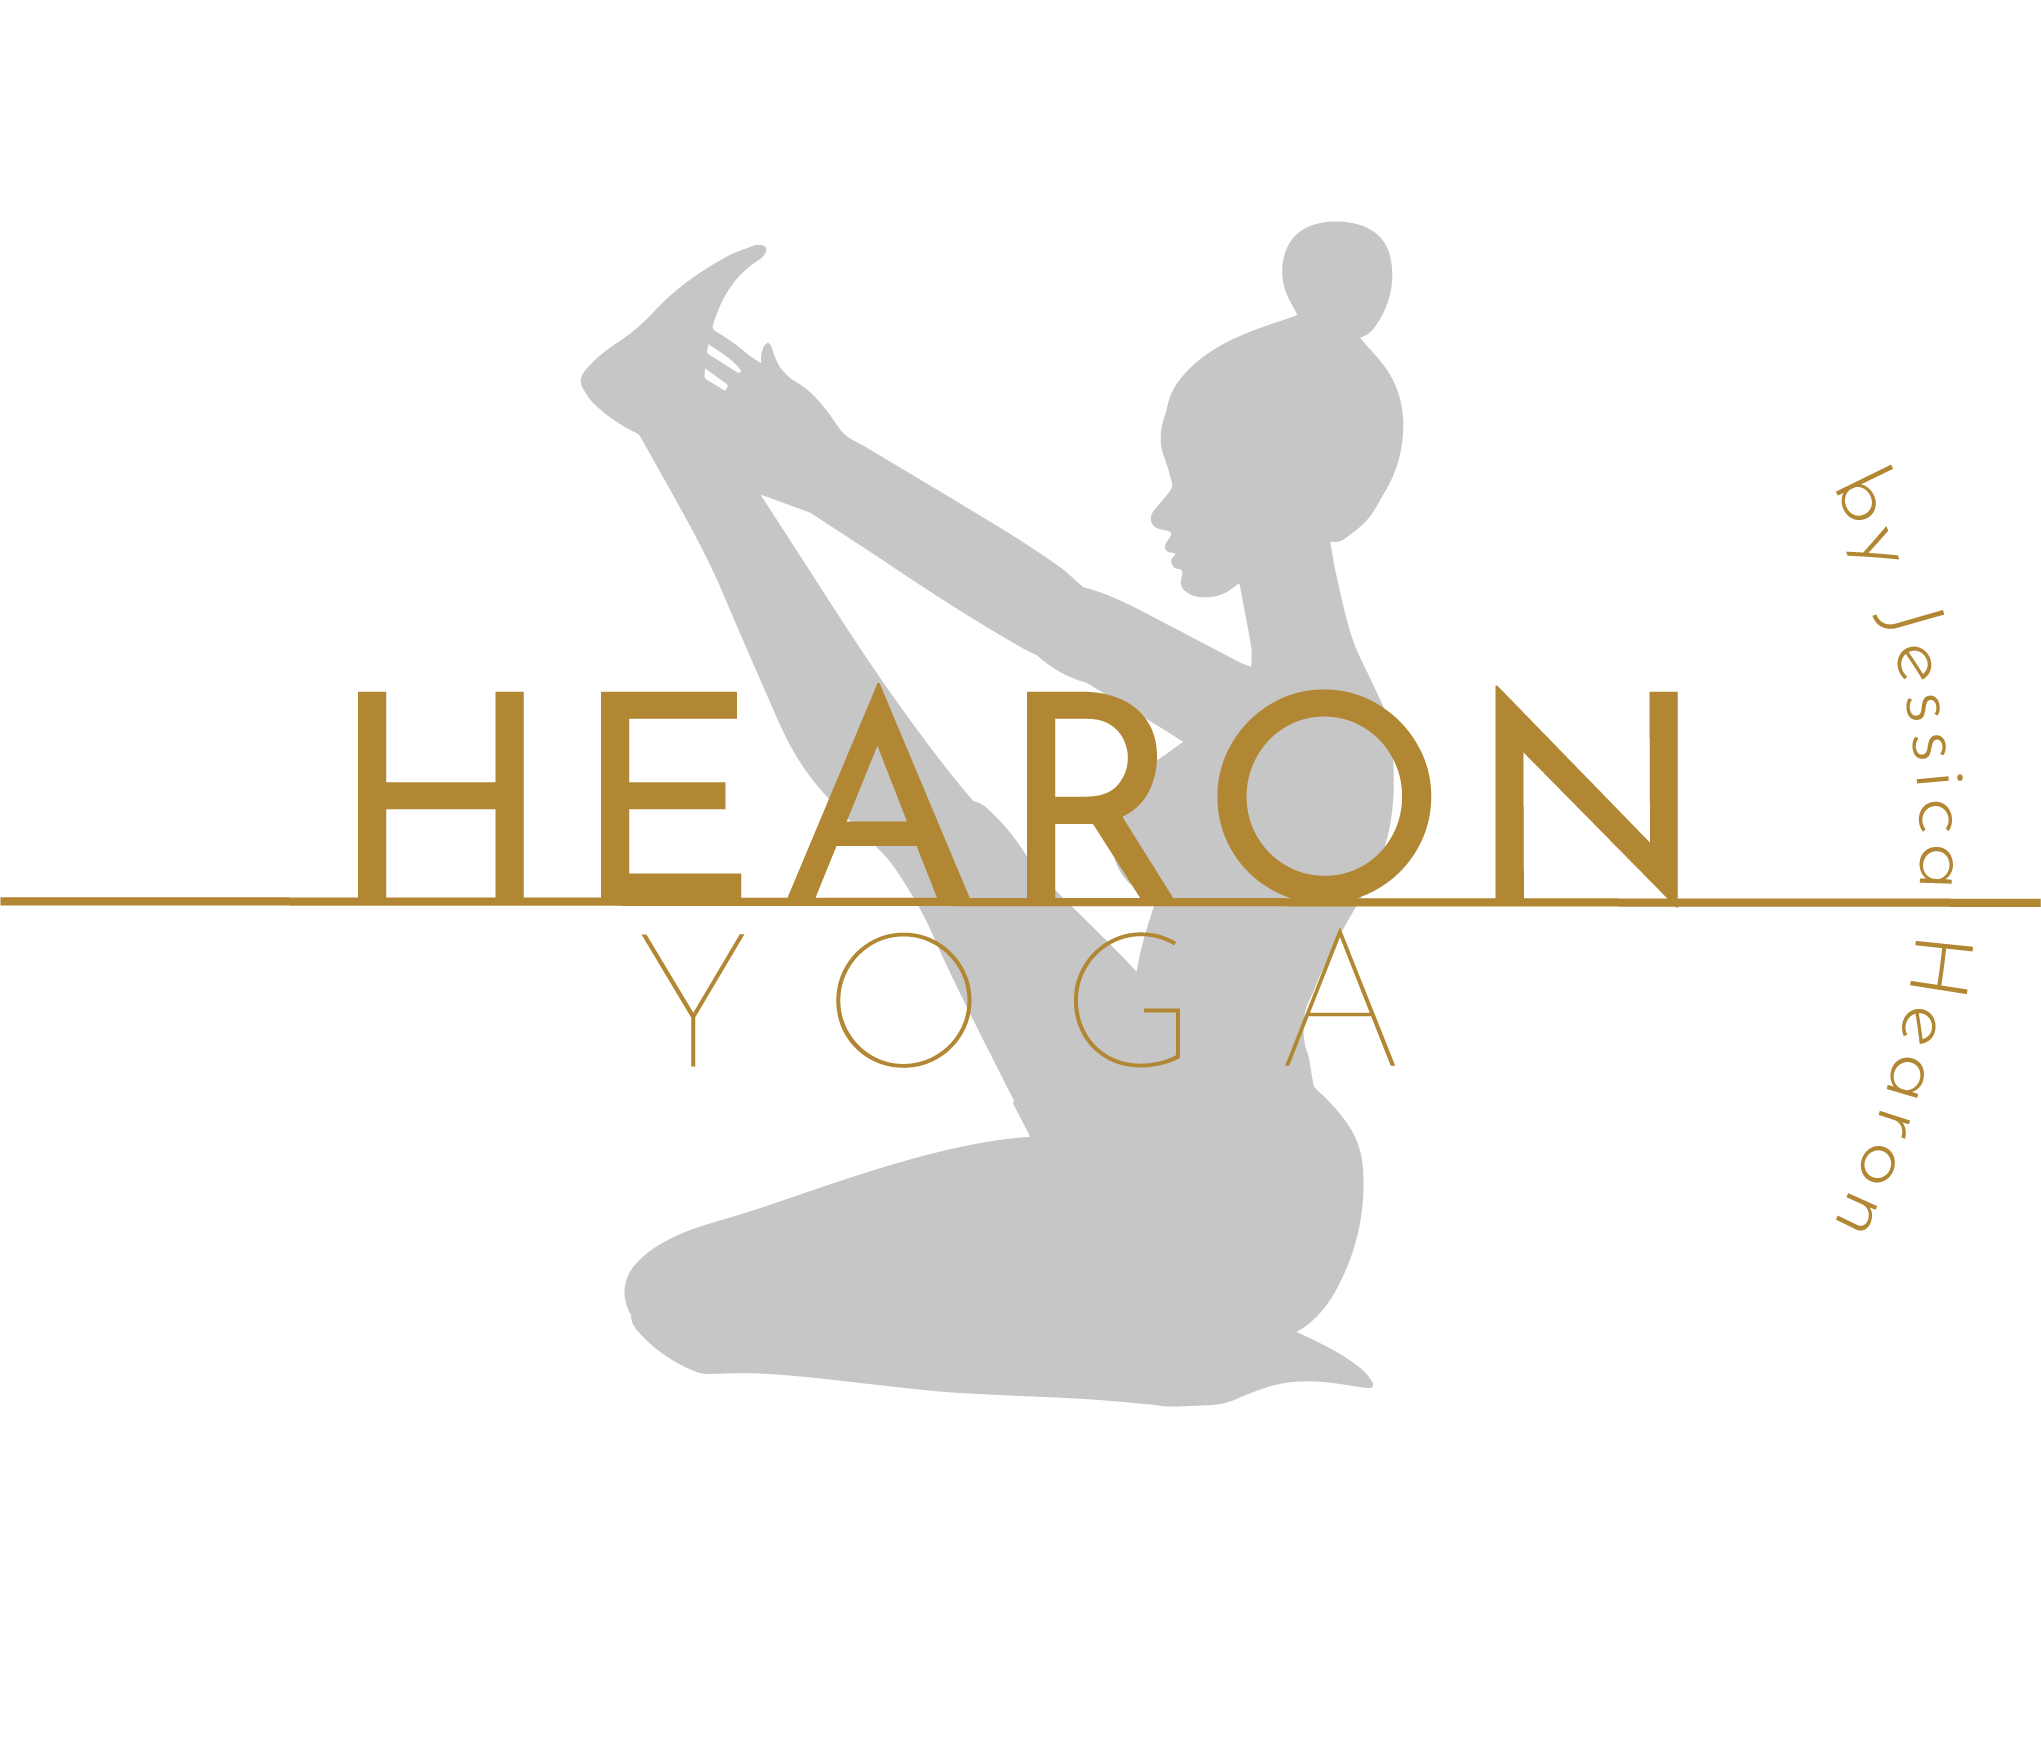 Hearon Yoga